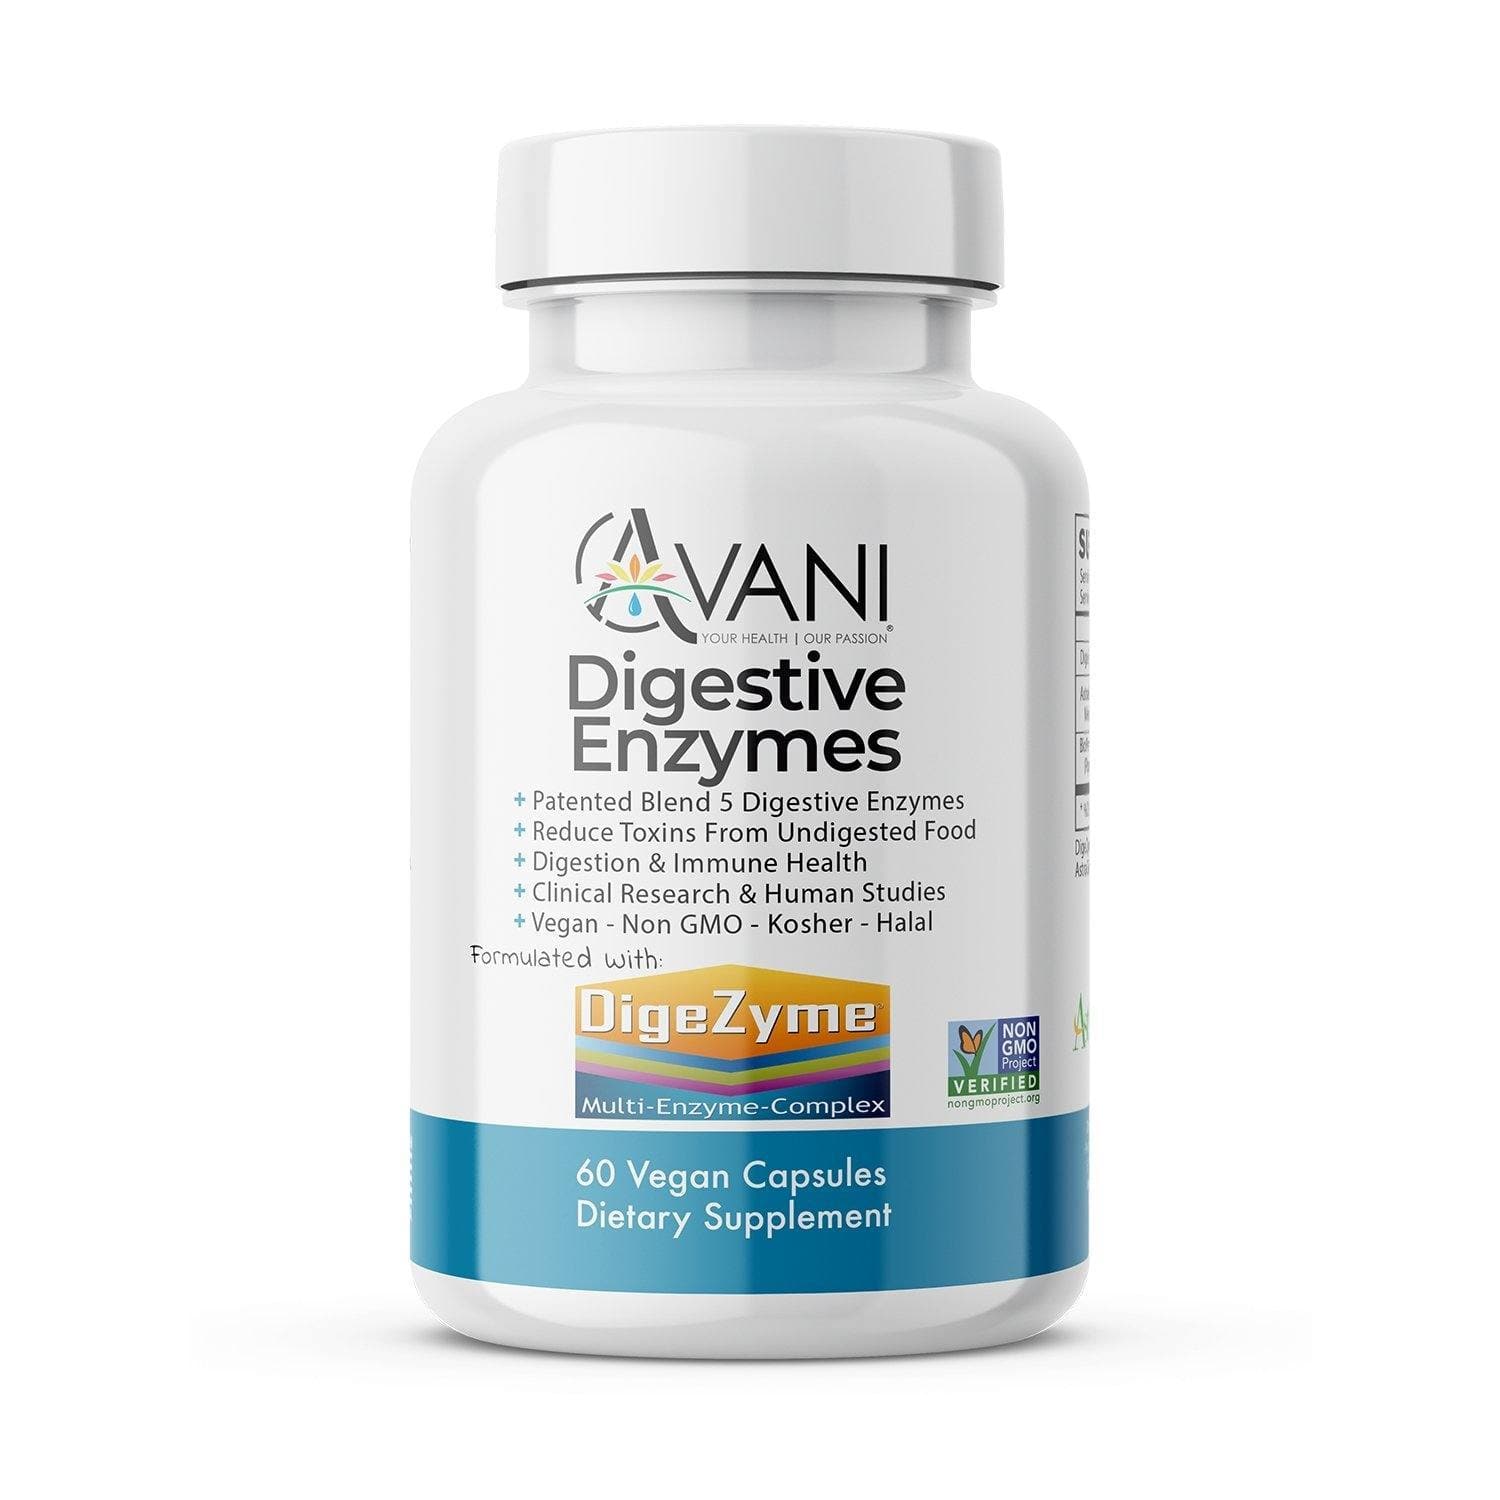 Digezyme® 5 Digestive Enzymes to Aid Digestion - Avani Wellness